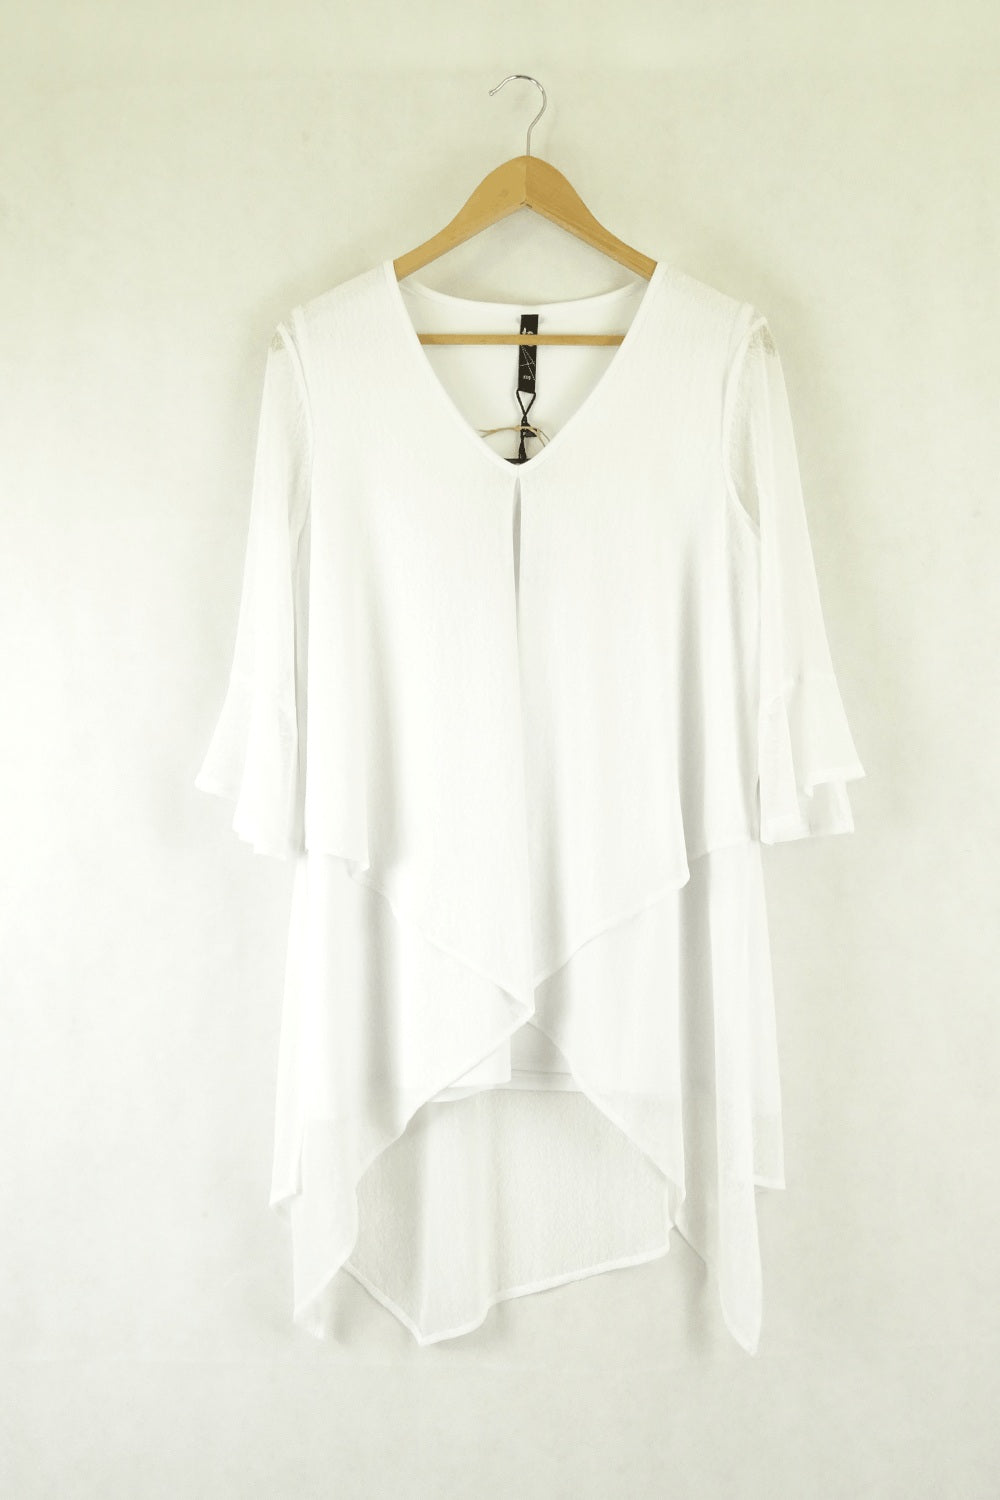 Taking Shape TS White Dress XXS - Reluv Clothing Australia